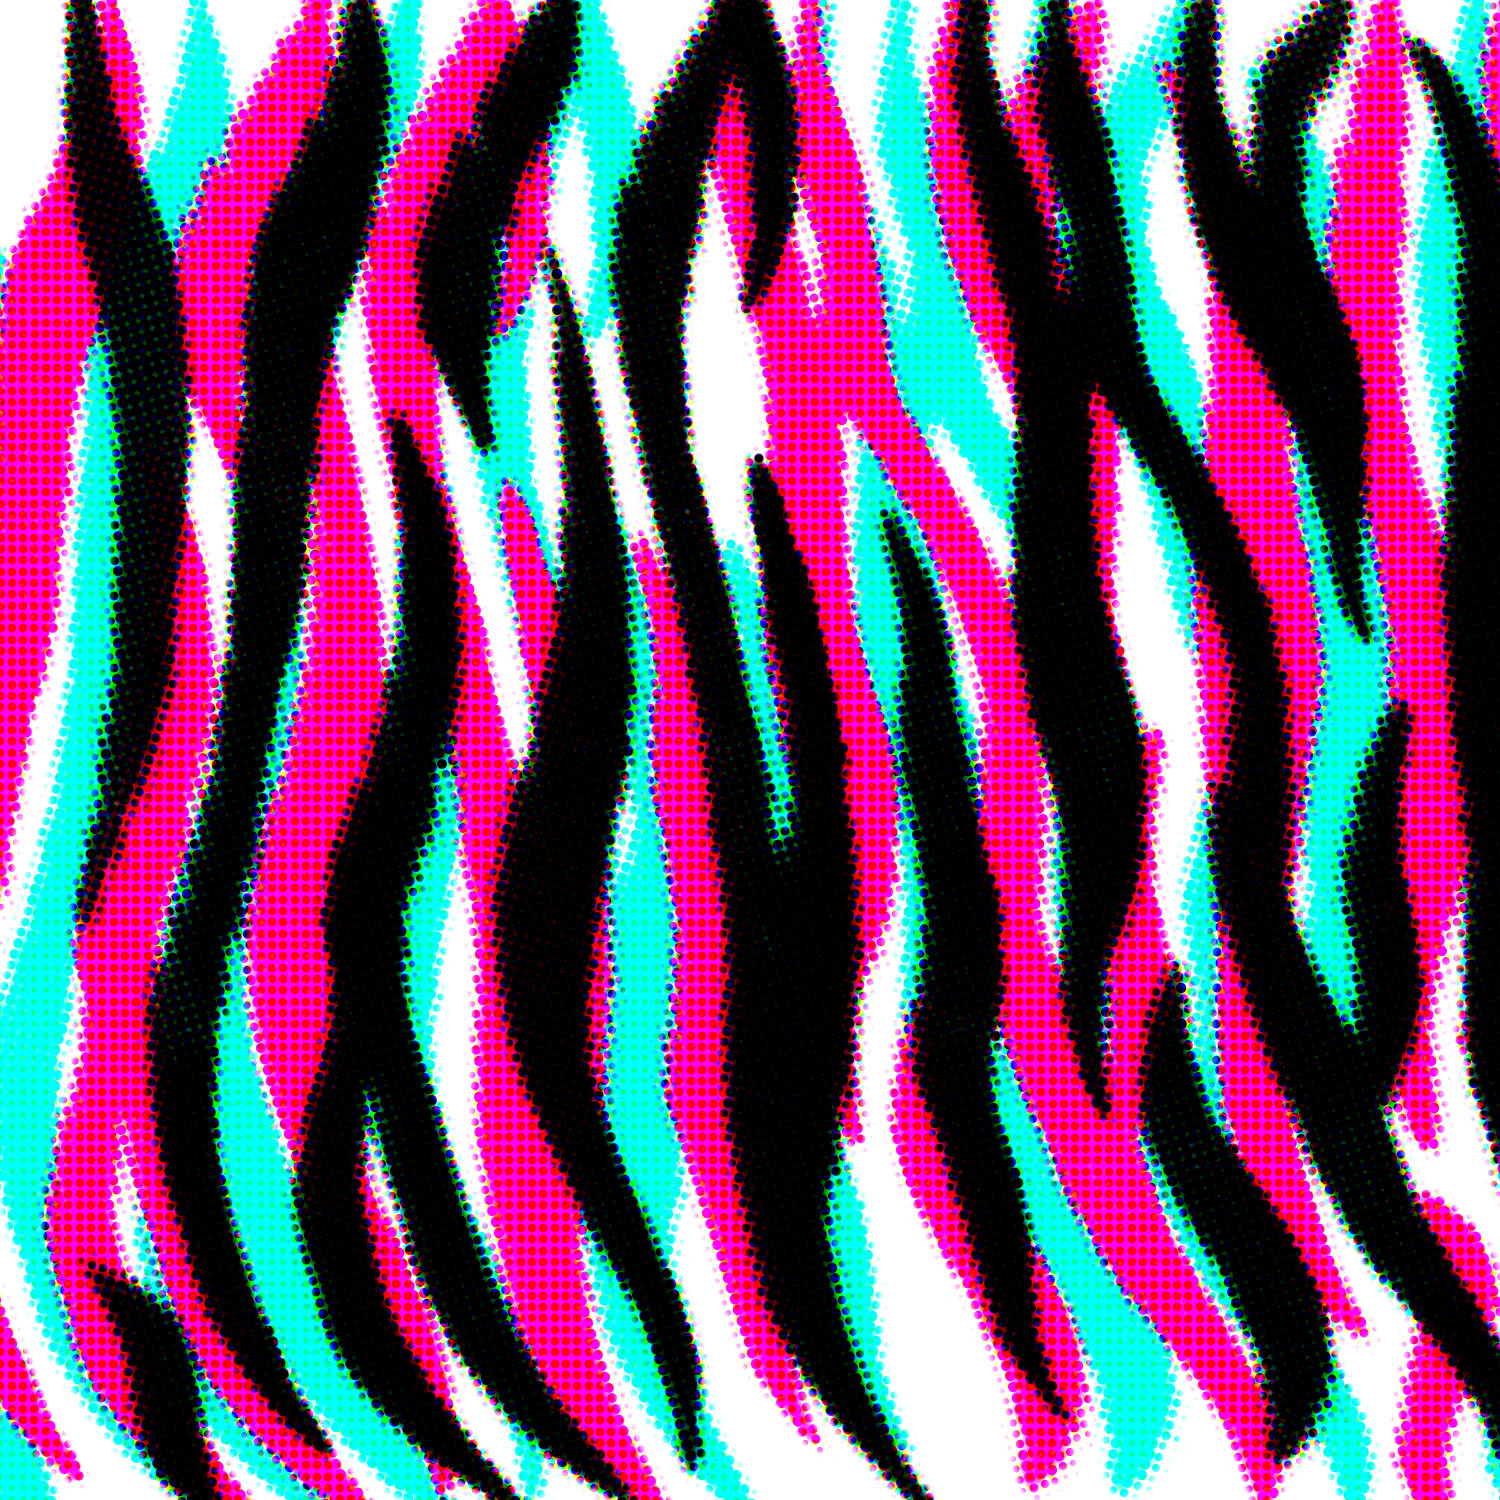 Zebra Print Wallpapers, HD Images Zebra Print Collection, SHXimaI